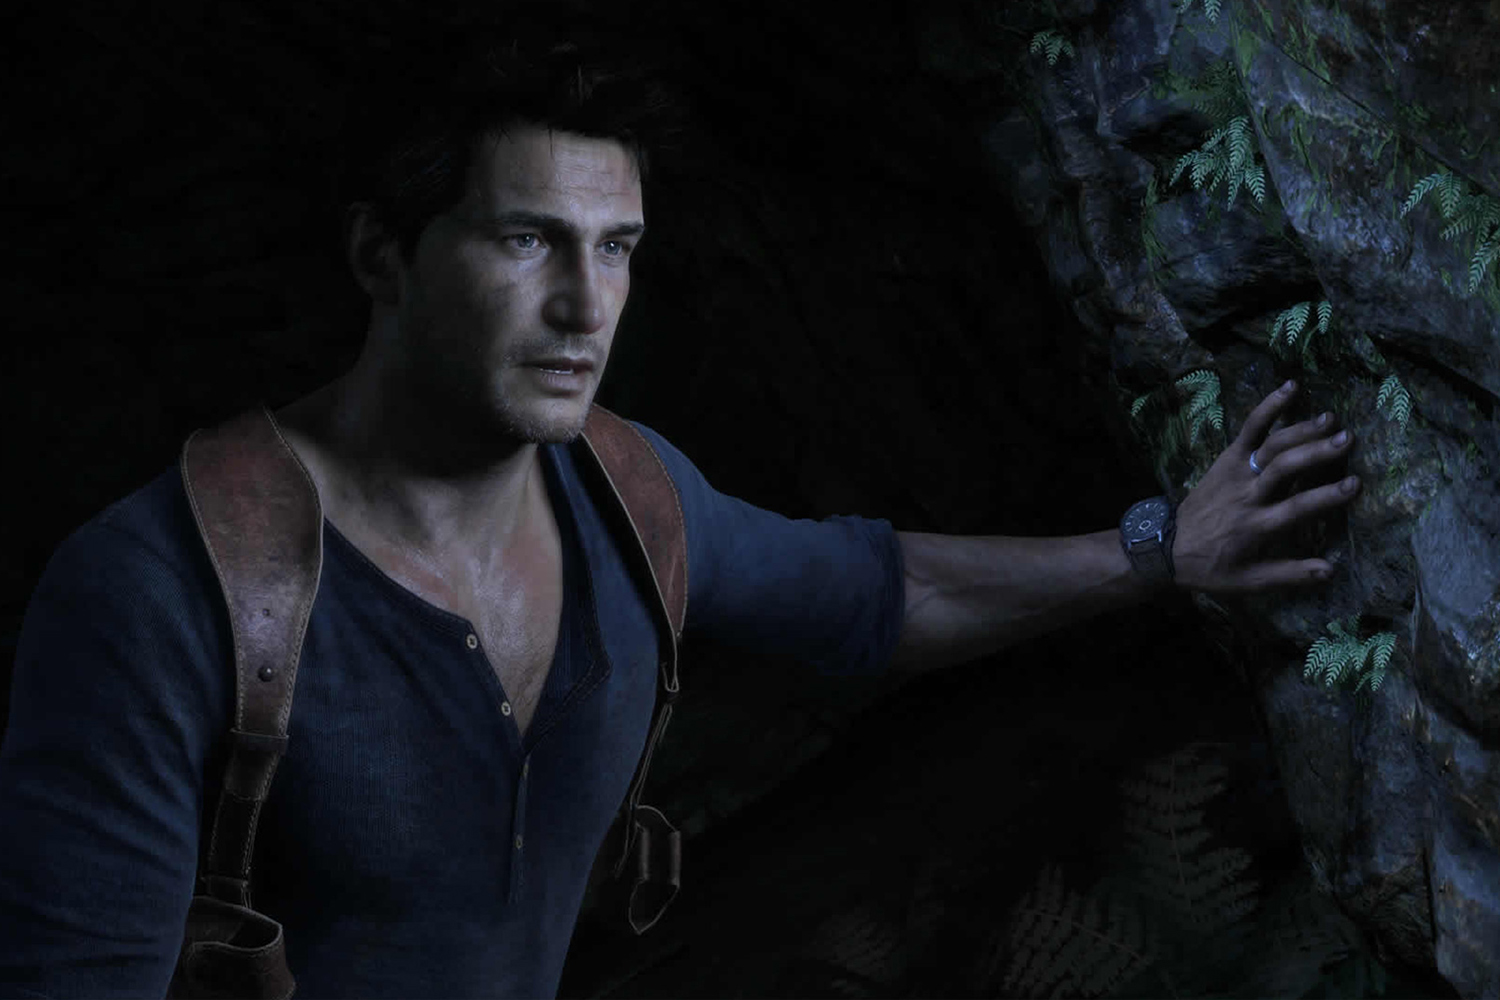 Uncharted 4: A Thief's End recebe data de lançamento